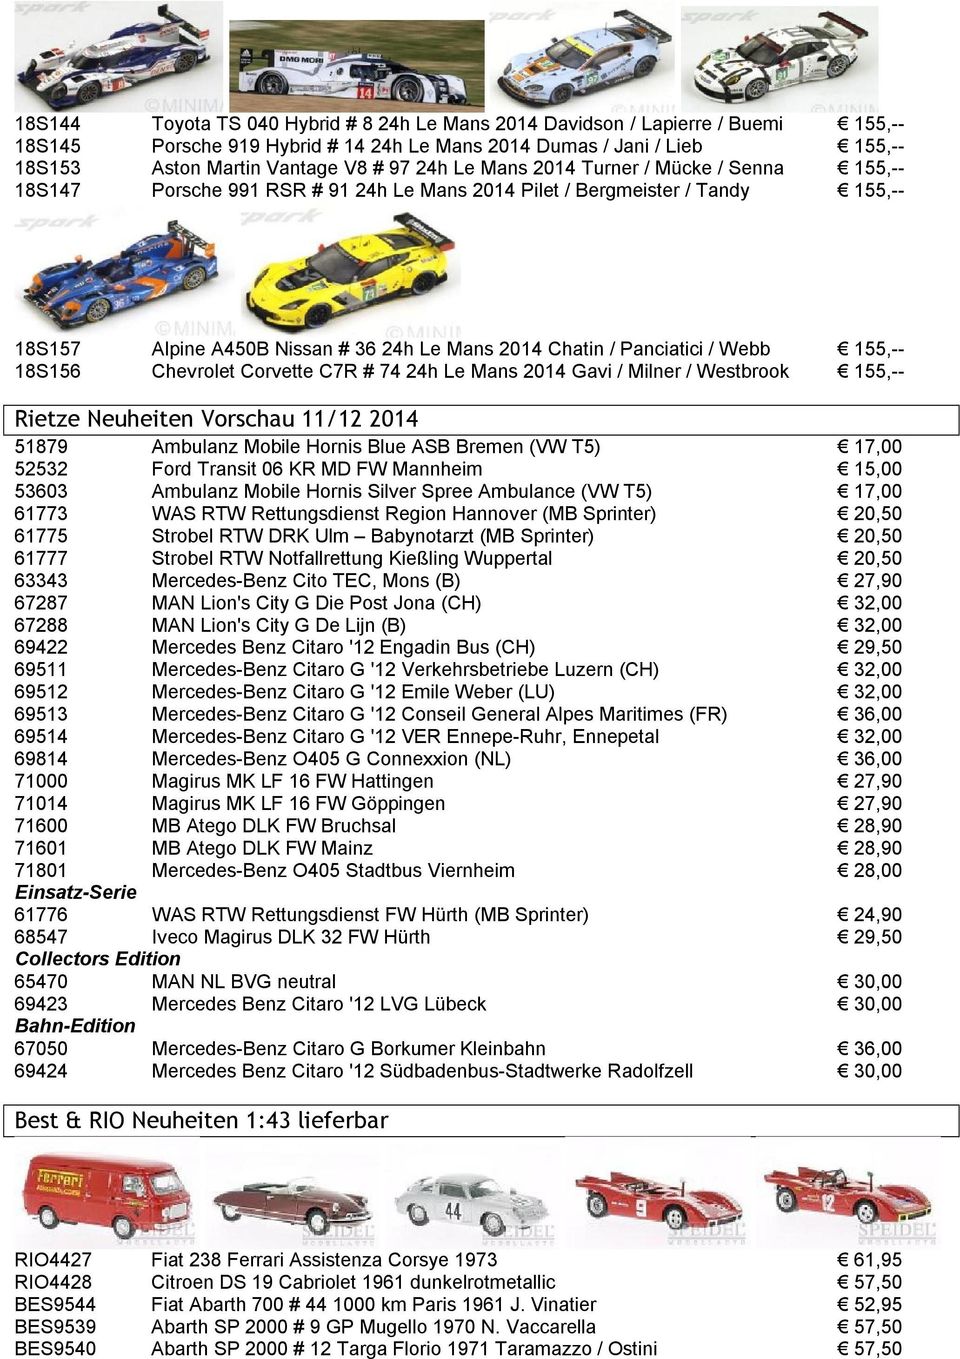 155,-- 18S156 Chevrolet Corvette C7R # 74 24h Le Mans 2014 Gavi / Milner / Westbrook 155,-- Rietze Neuheiten Vorschau 11/12 2014 51879 Ambulanz Mobile Hornis Blue ASB Bremen (VW T5) 17,00 52532 Ford